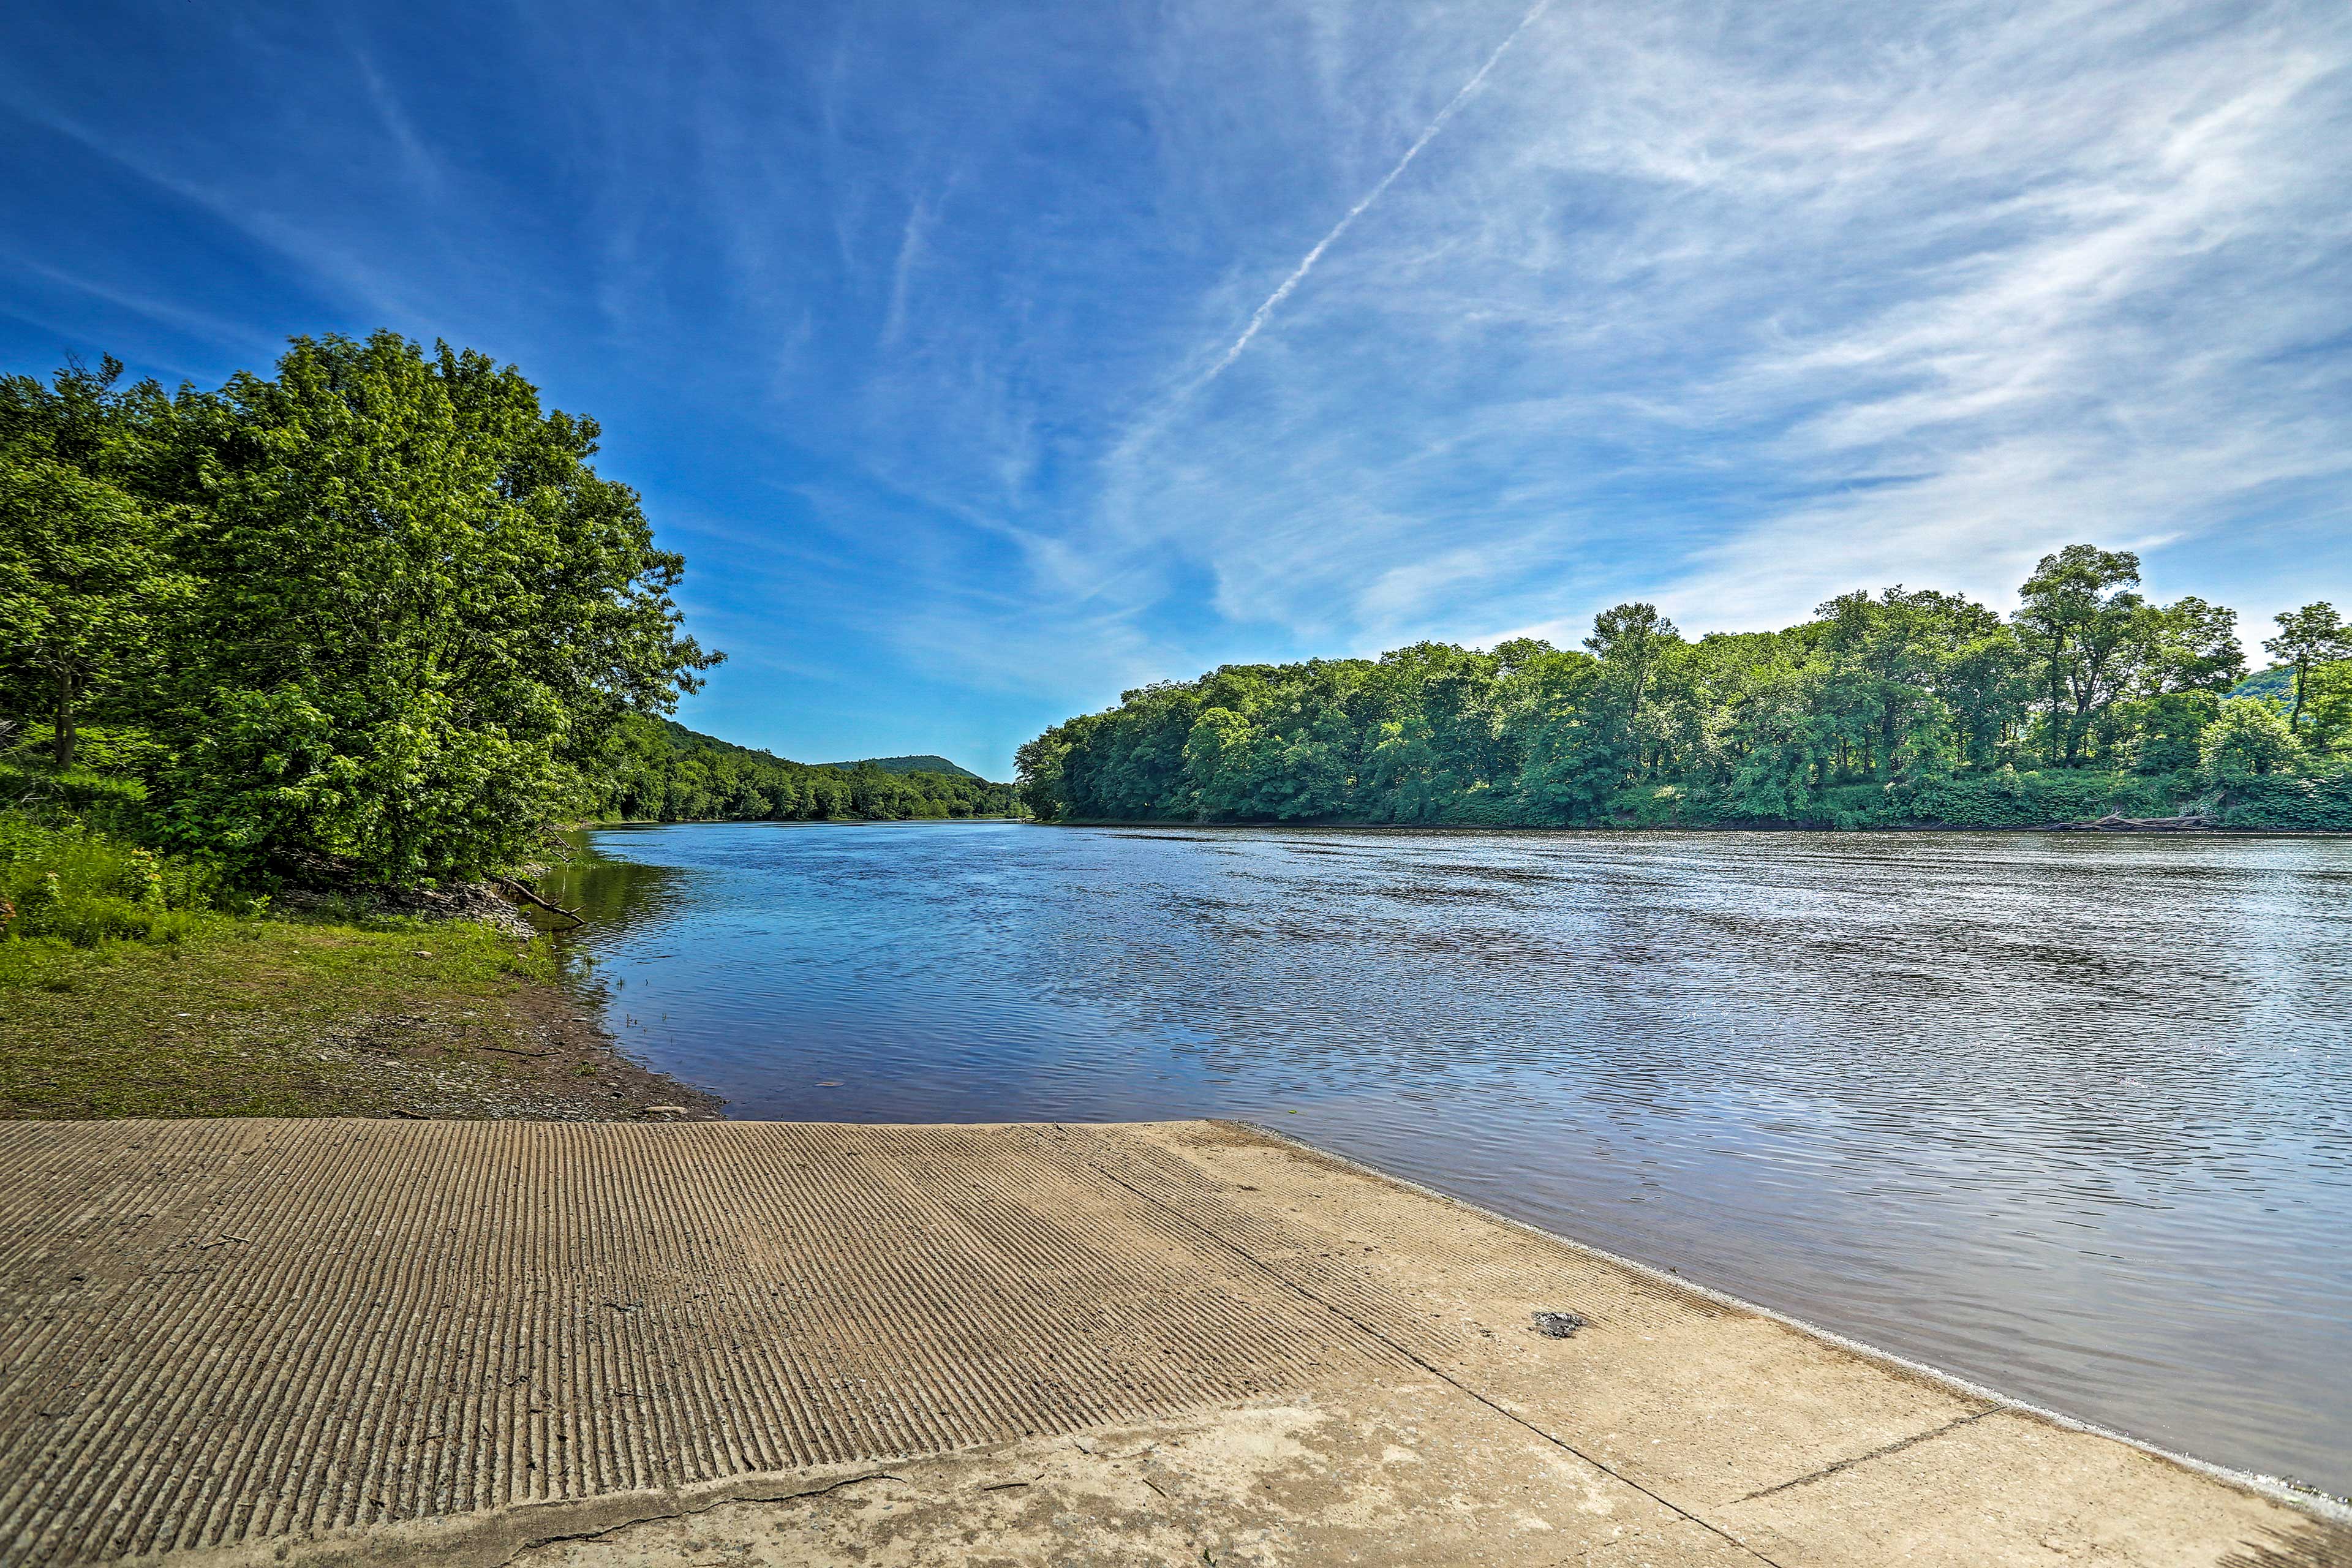 Delaware Water Gap National Recreation Area